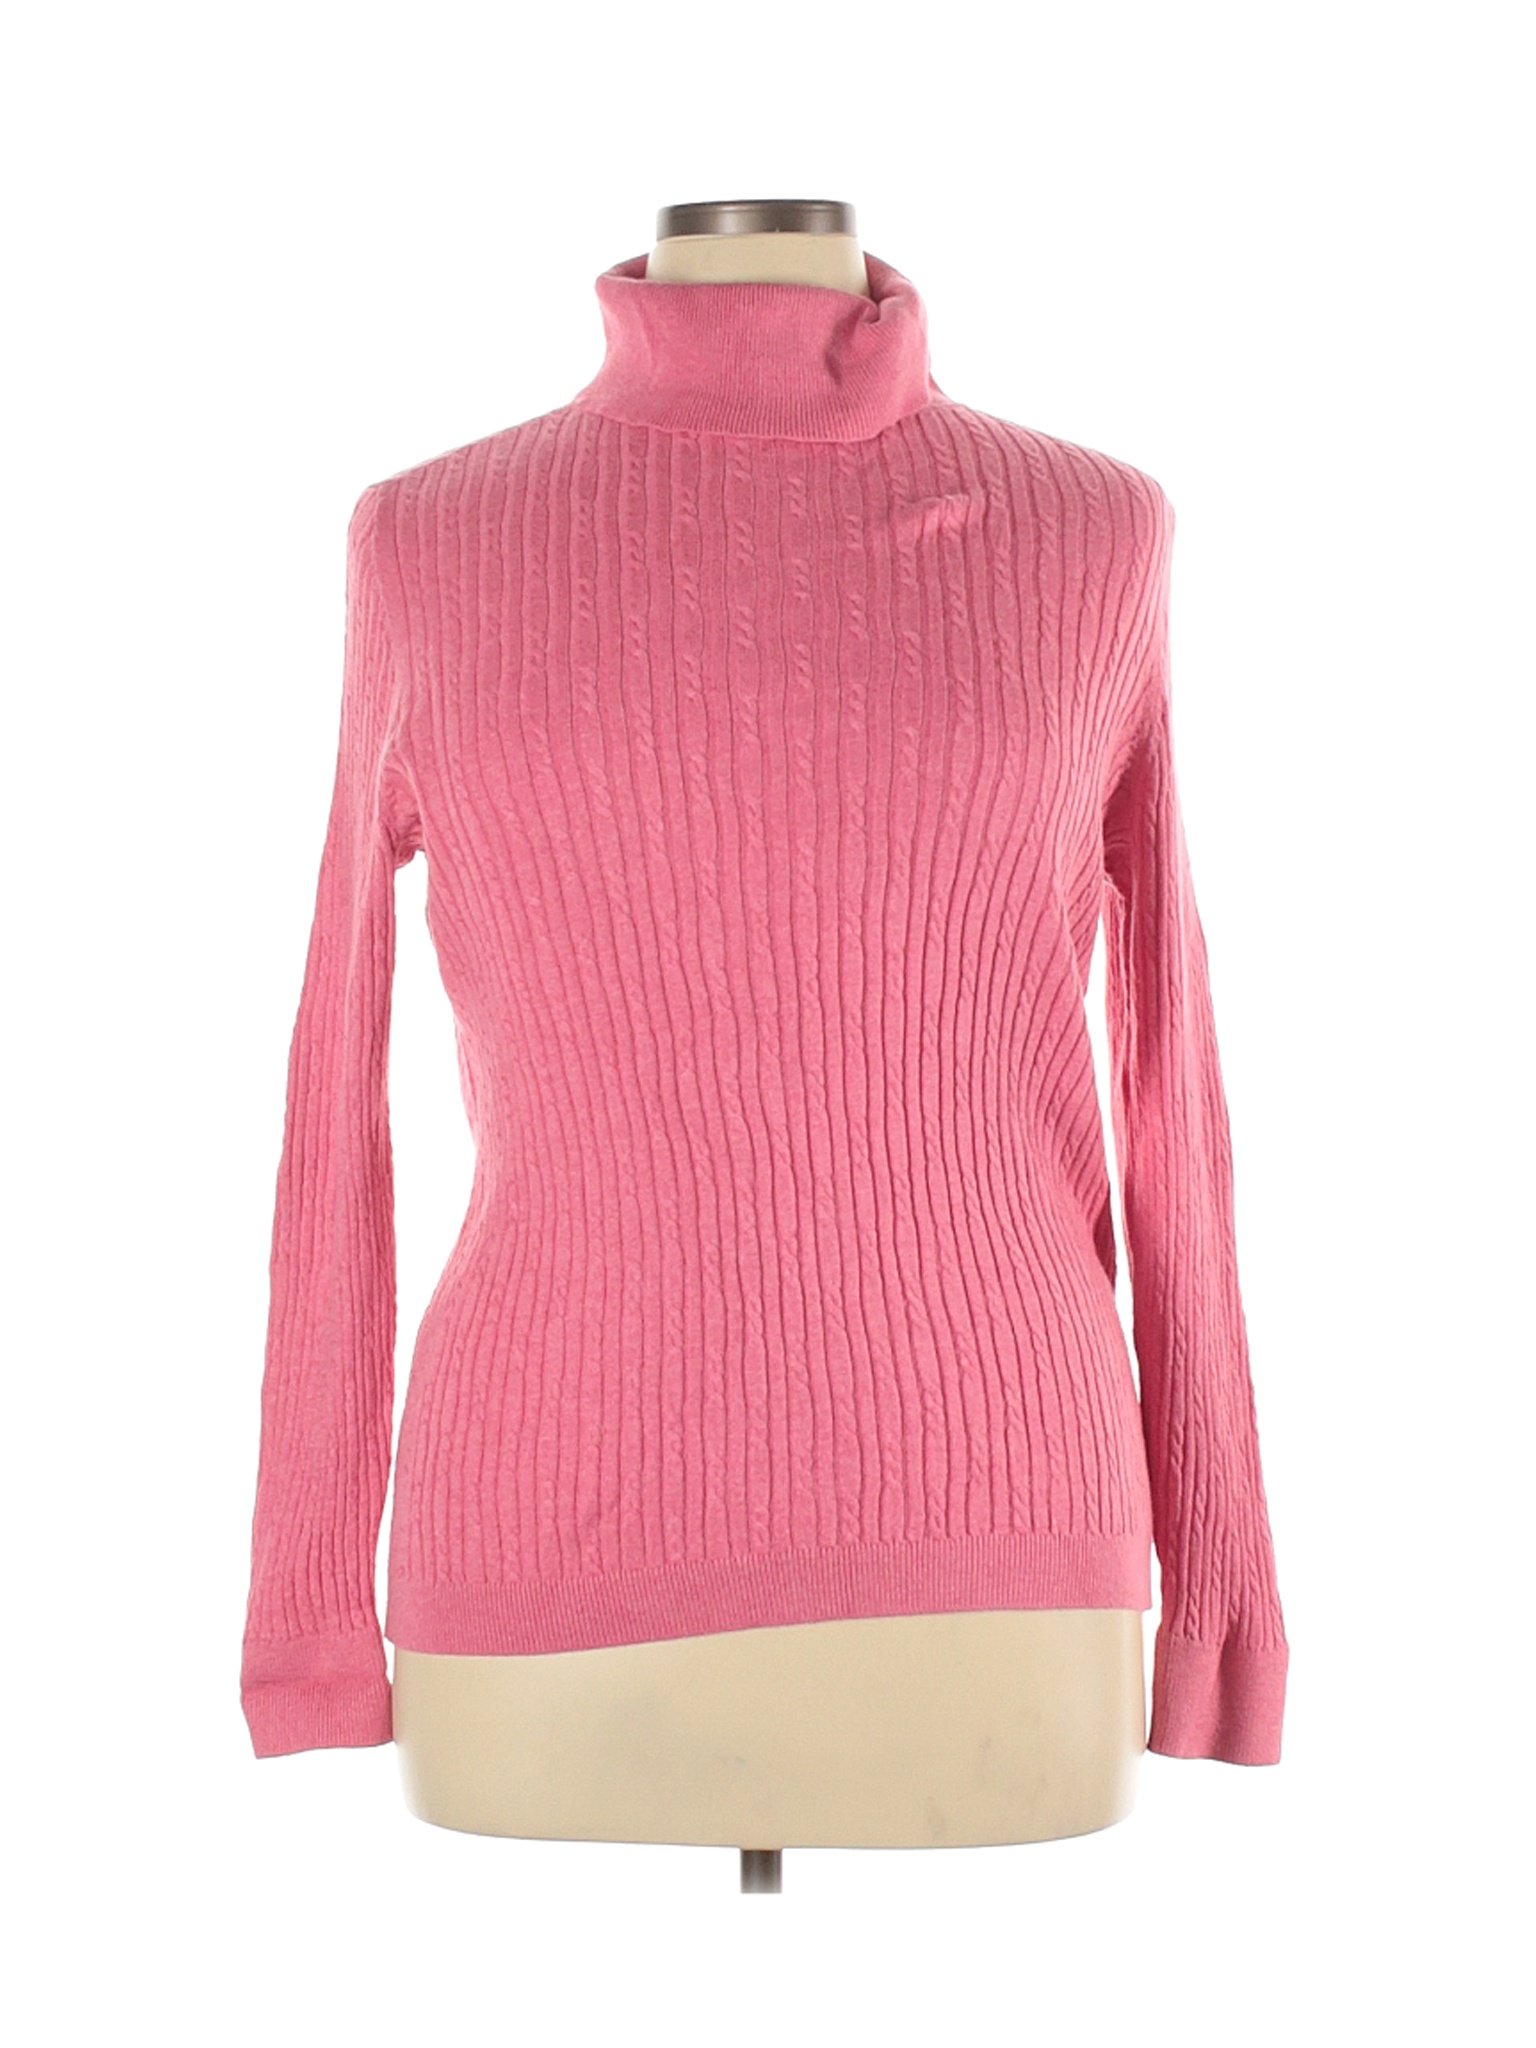 Talbots Women Pink Turtleneck Sweater XL | eBay